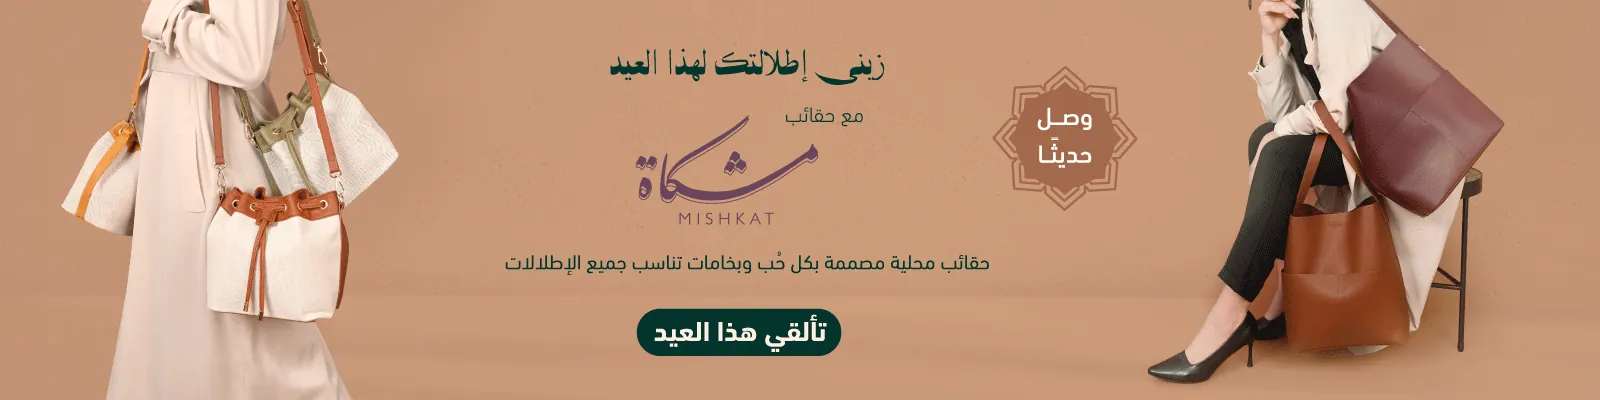 Mishkat Bags Webnew-media